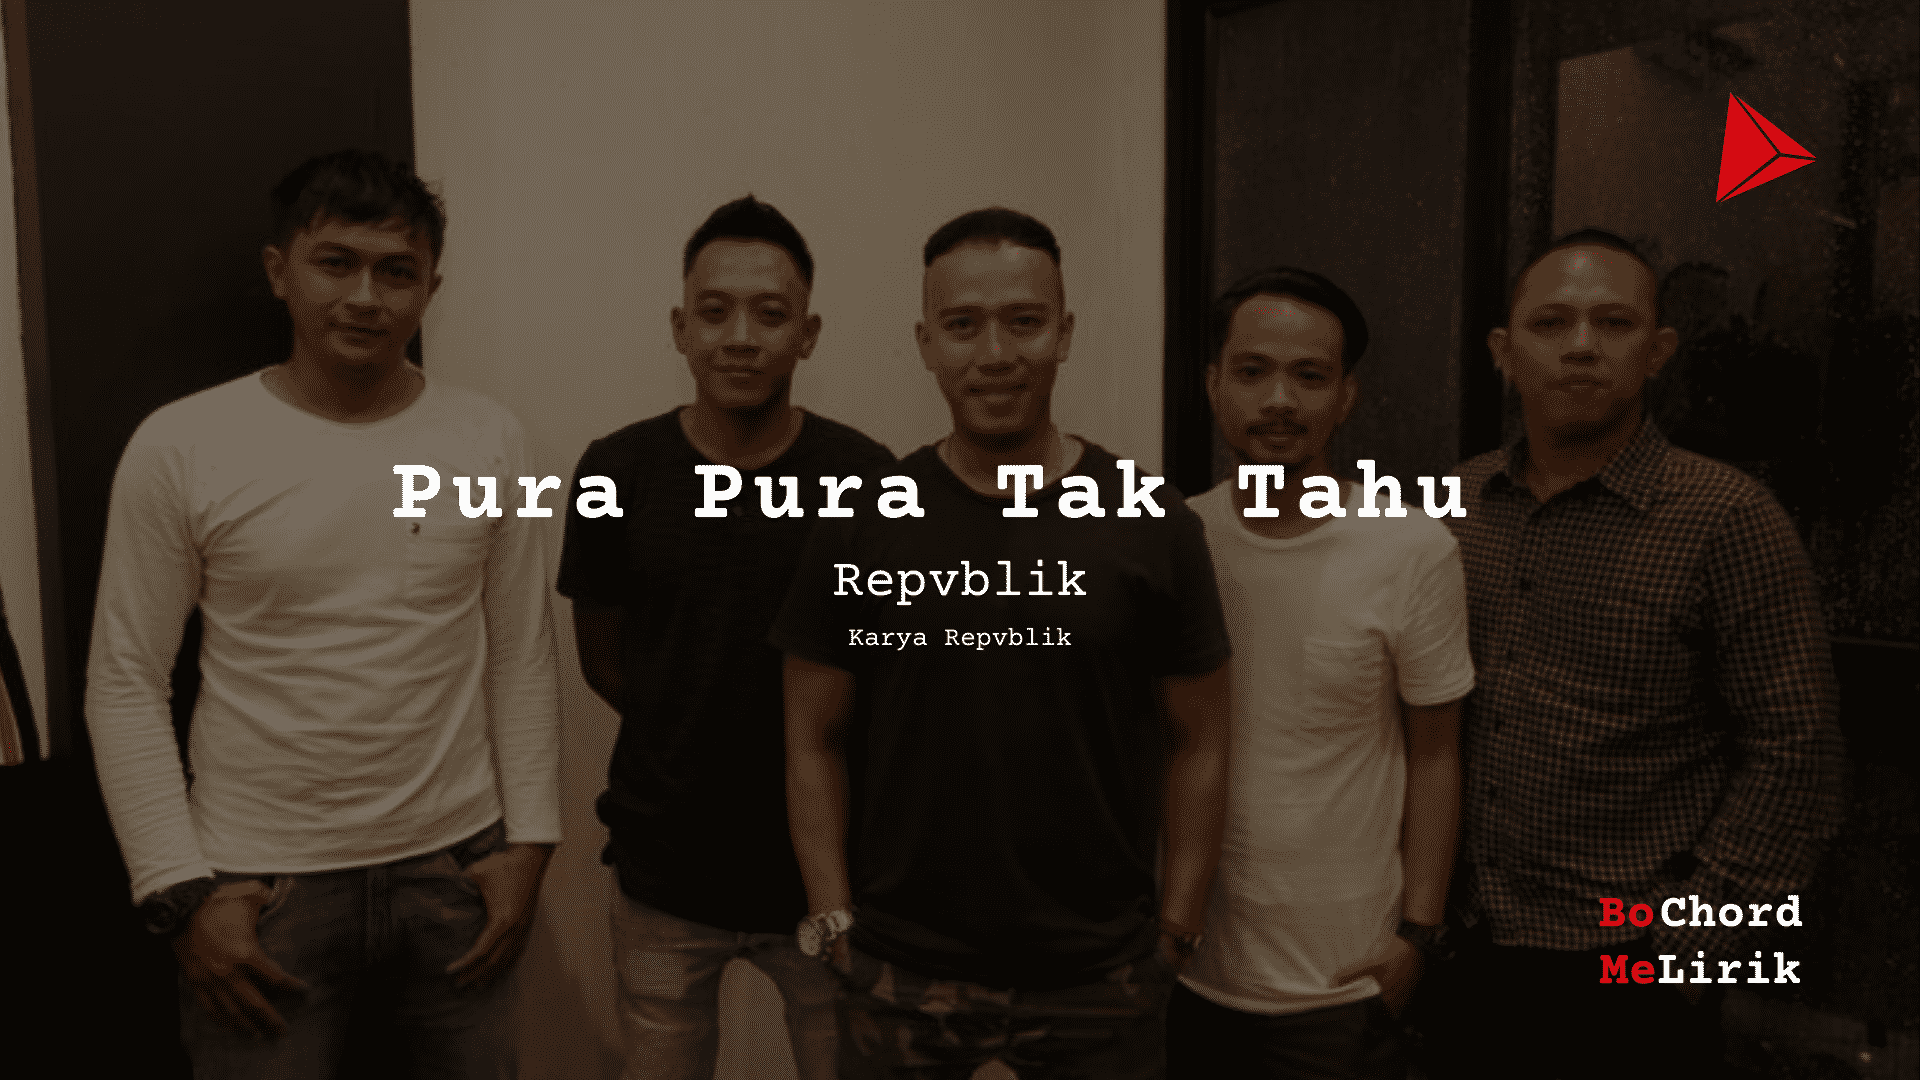 Apa Nama Album Lagu Pura-Pura Tak Tahu?